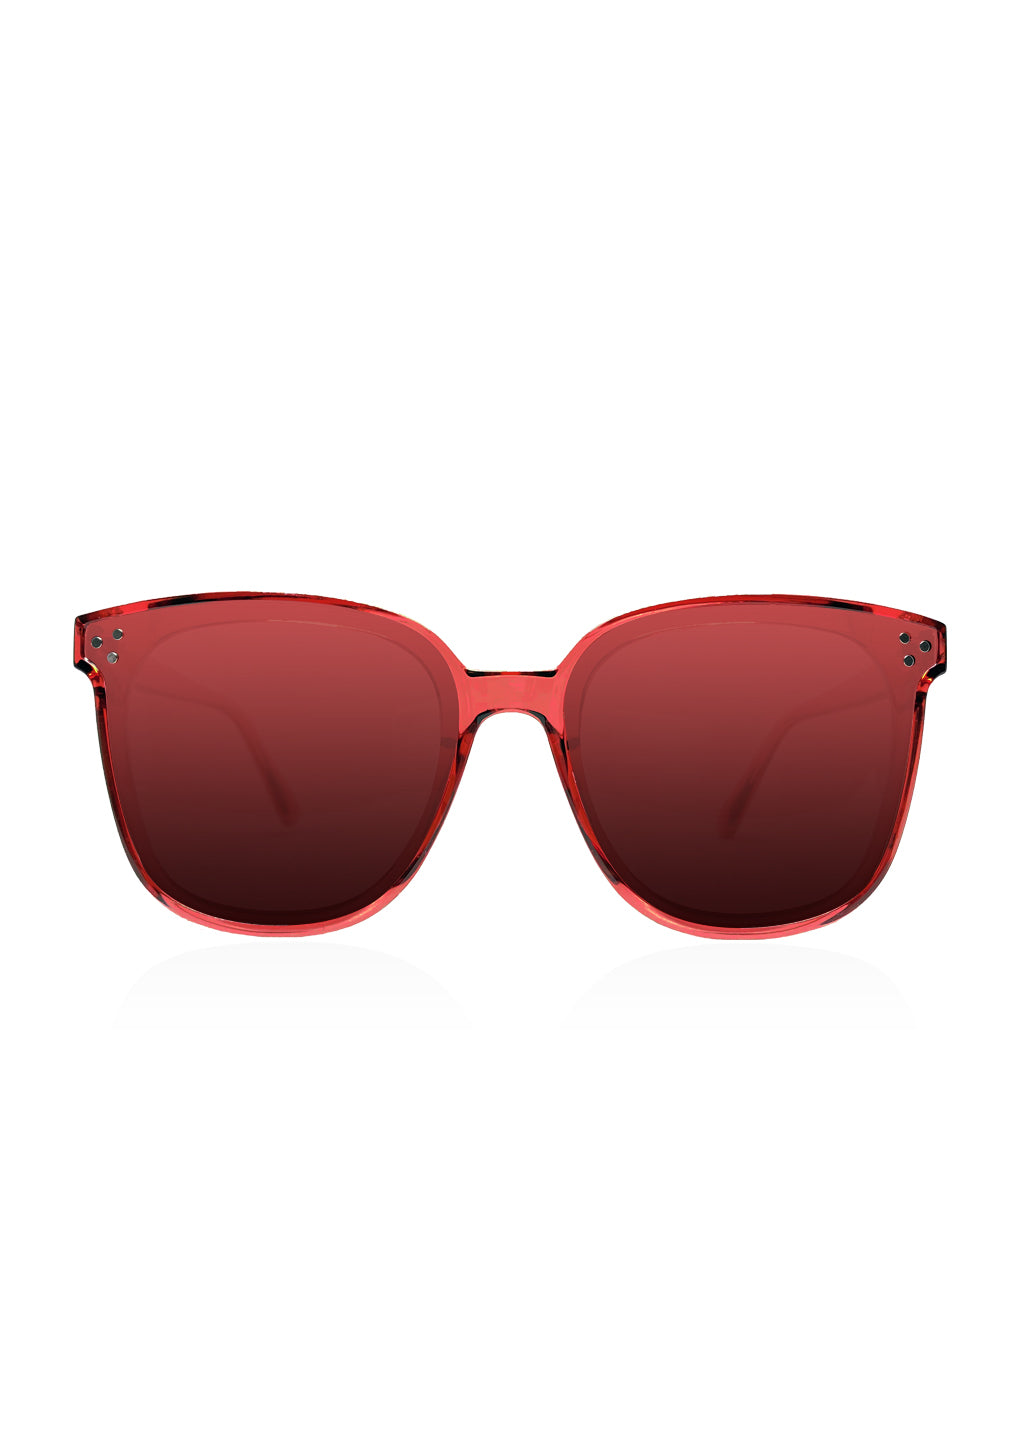 Magnolia Wayfarer sunglasses - Front